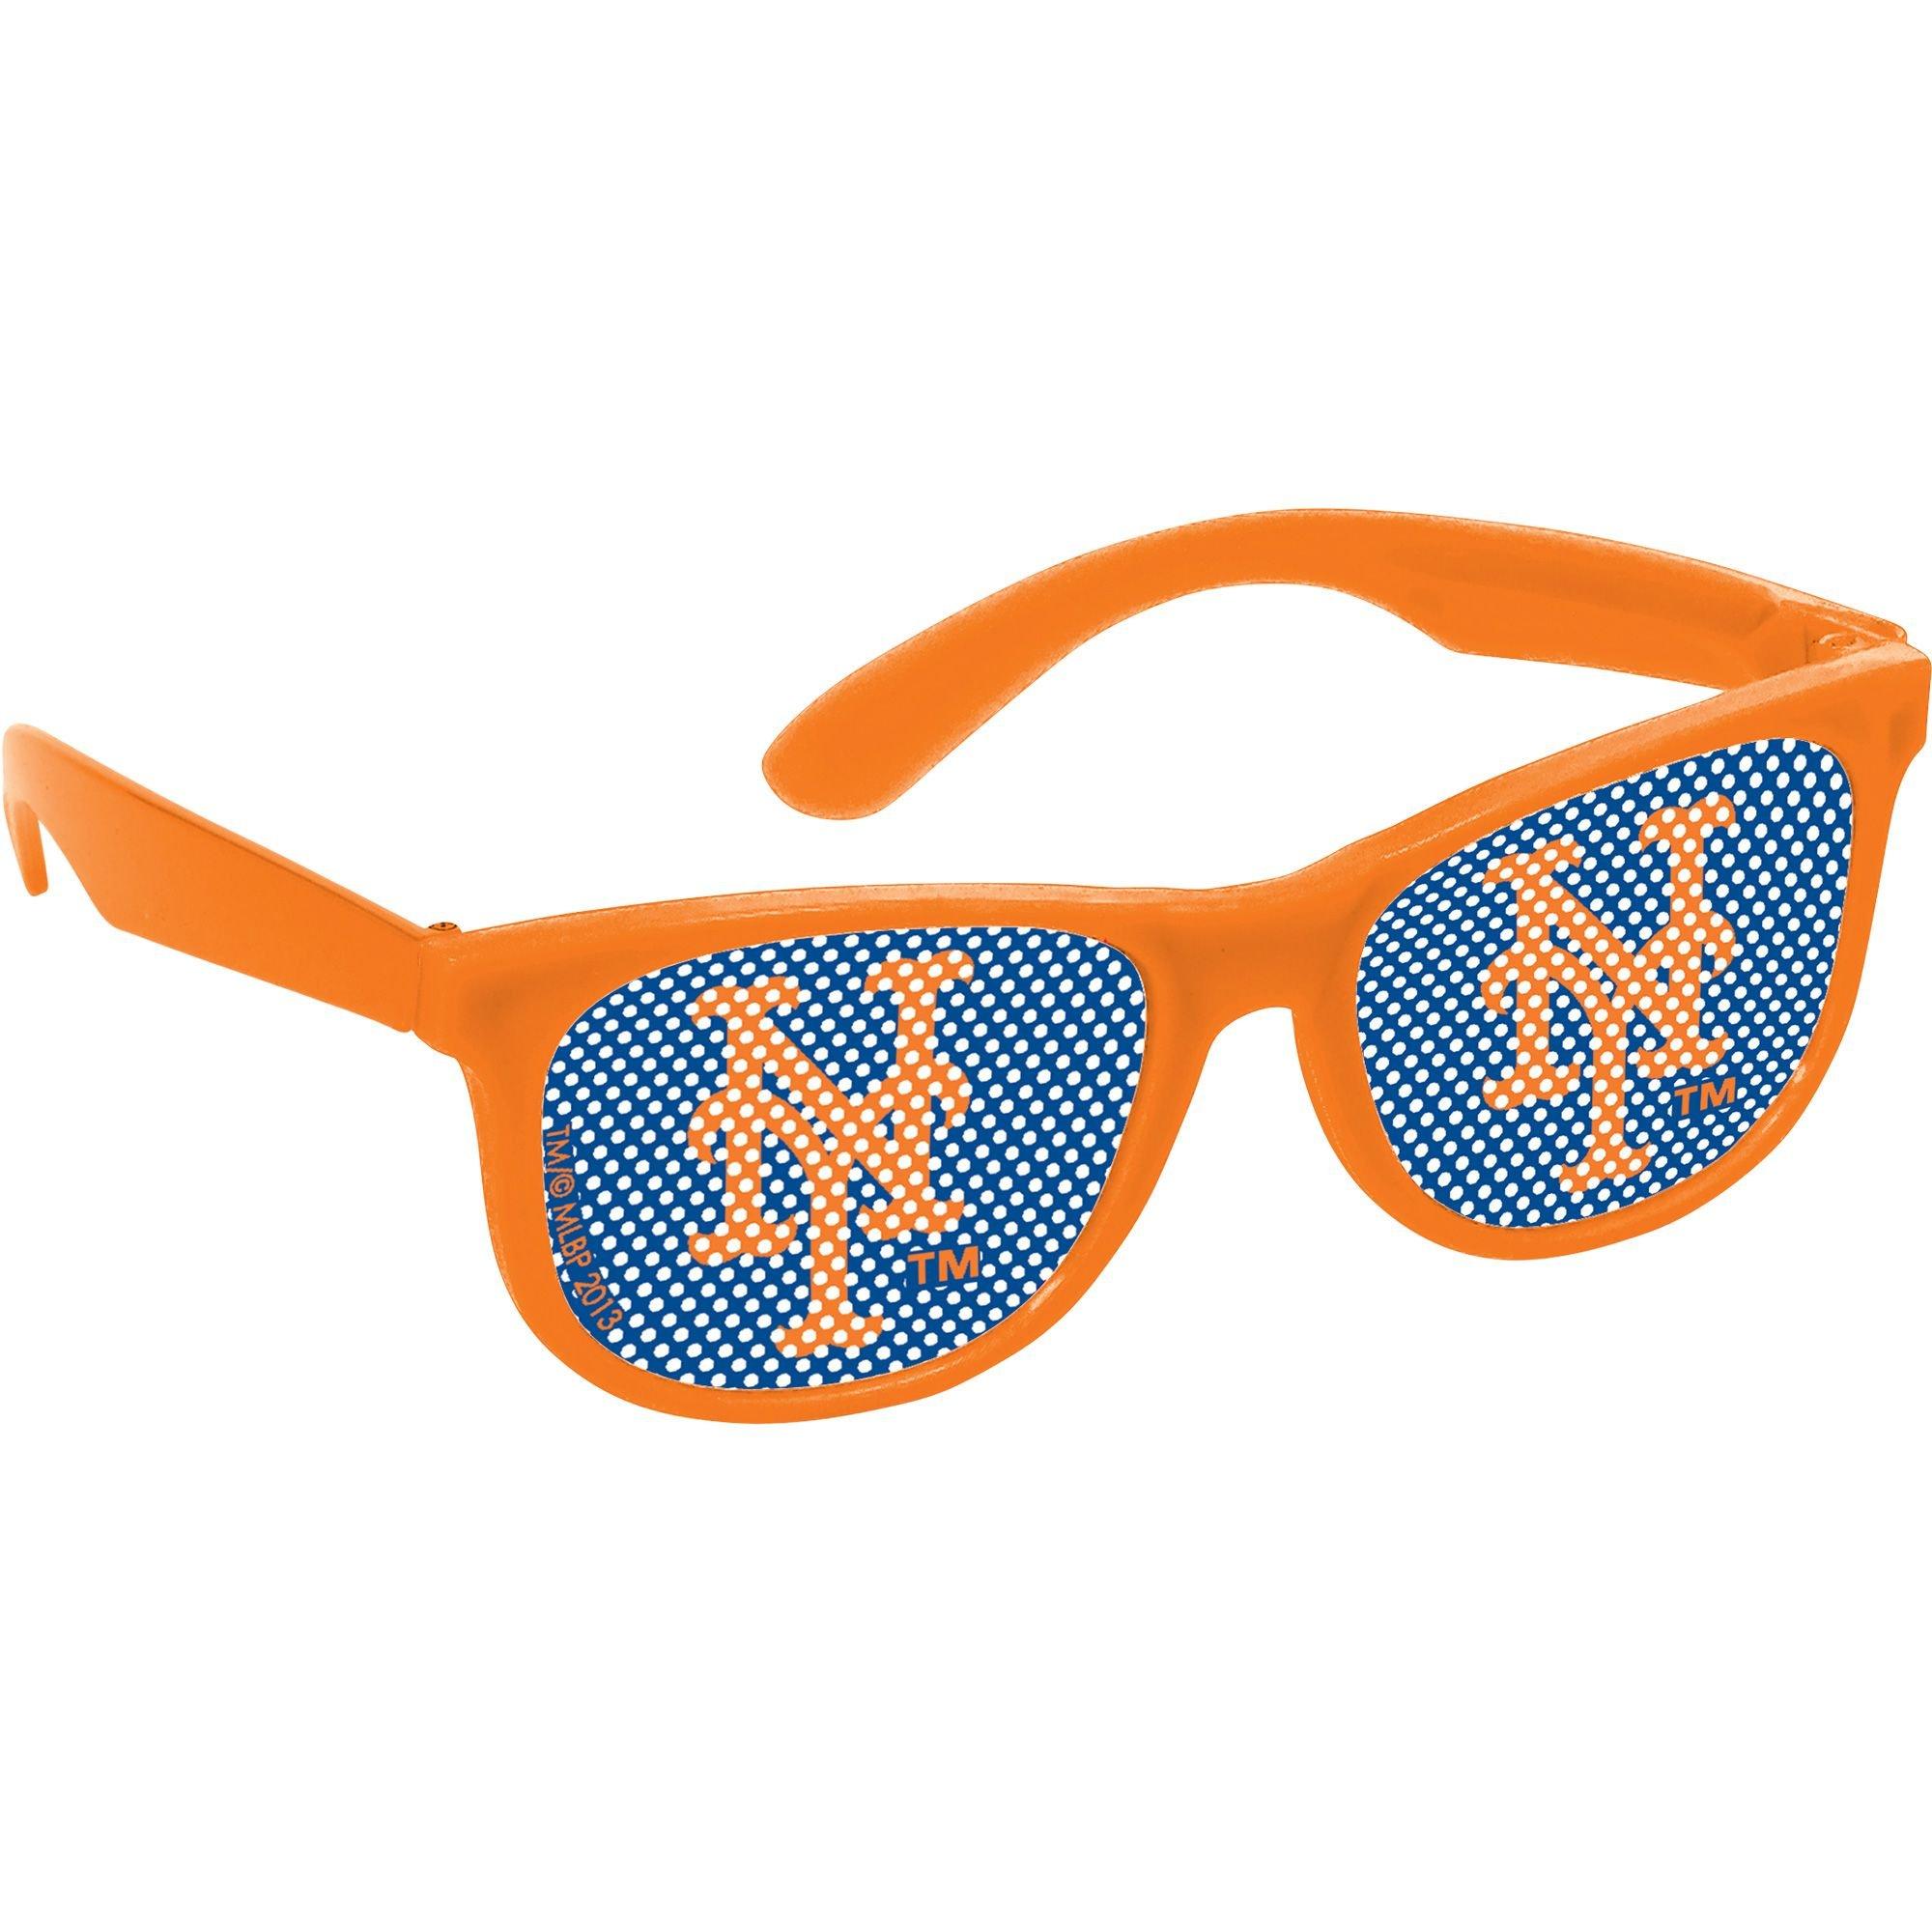 New York Mets Printed Glasses 10ct